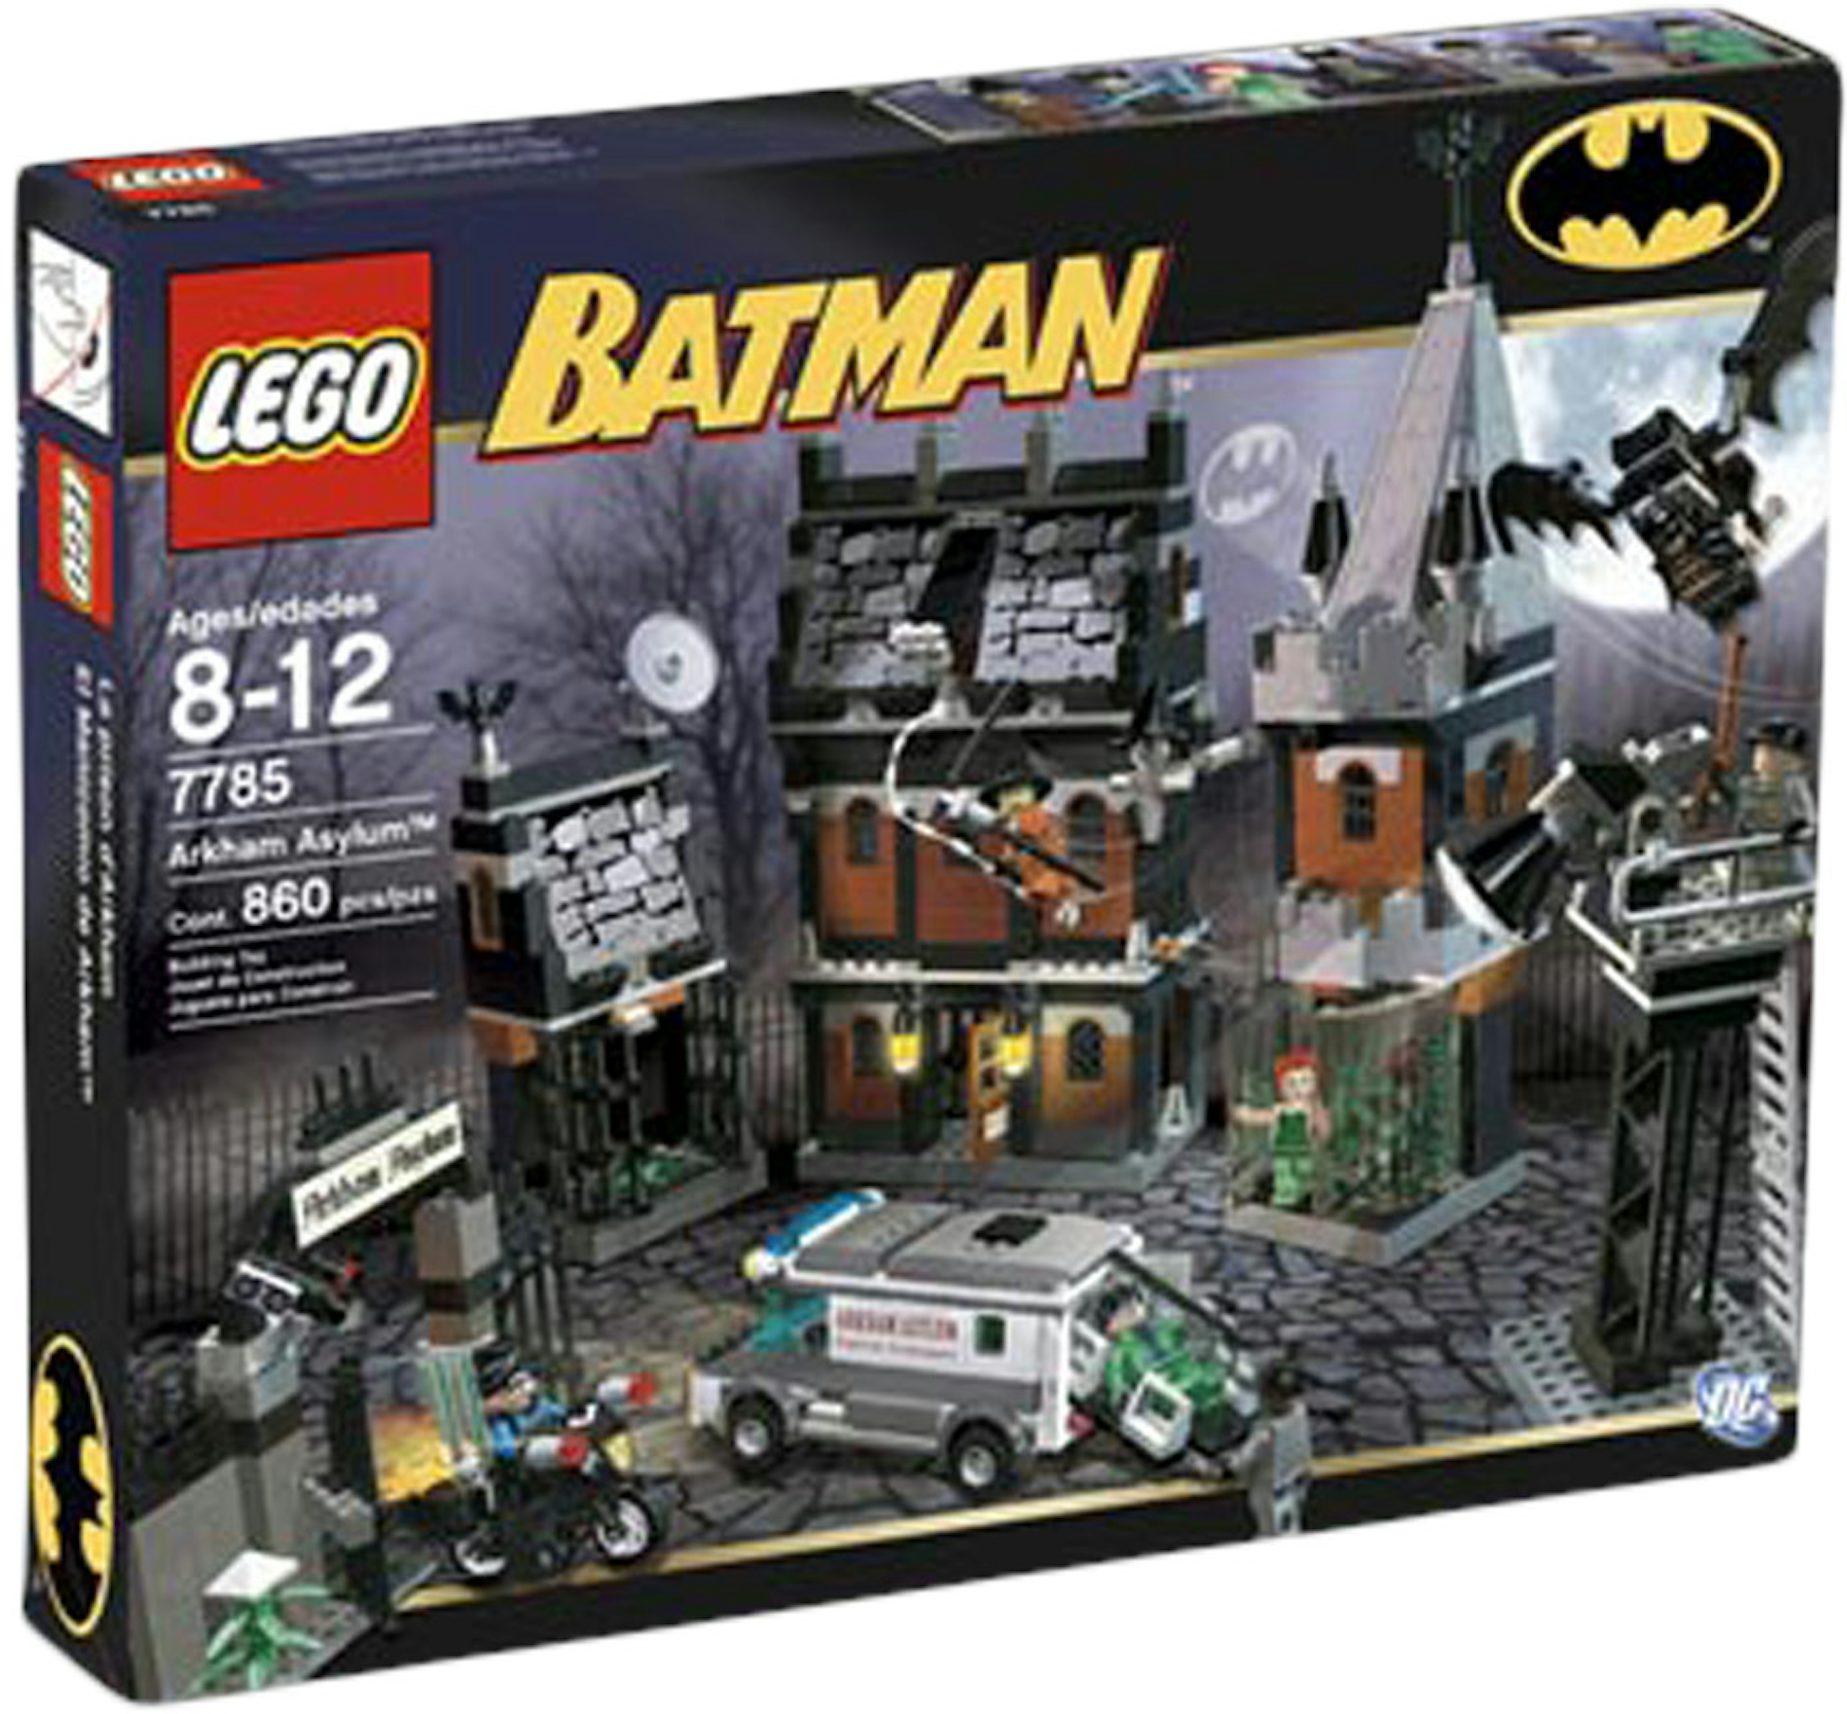 https://images.stockx.com/images/LEGO-Batman-Arkham-Asylum-Set-7785.jpg?fit=fill&bg=FFFFFF&w=1200&h=857&fm=jpg&auto=compress&dpr=2&trim=color&updated_at=1644594824&q=60